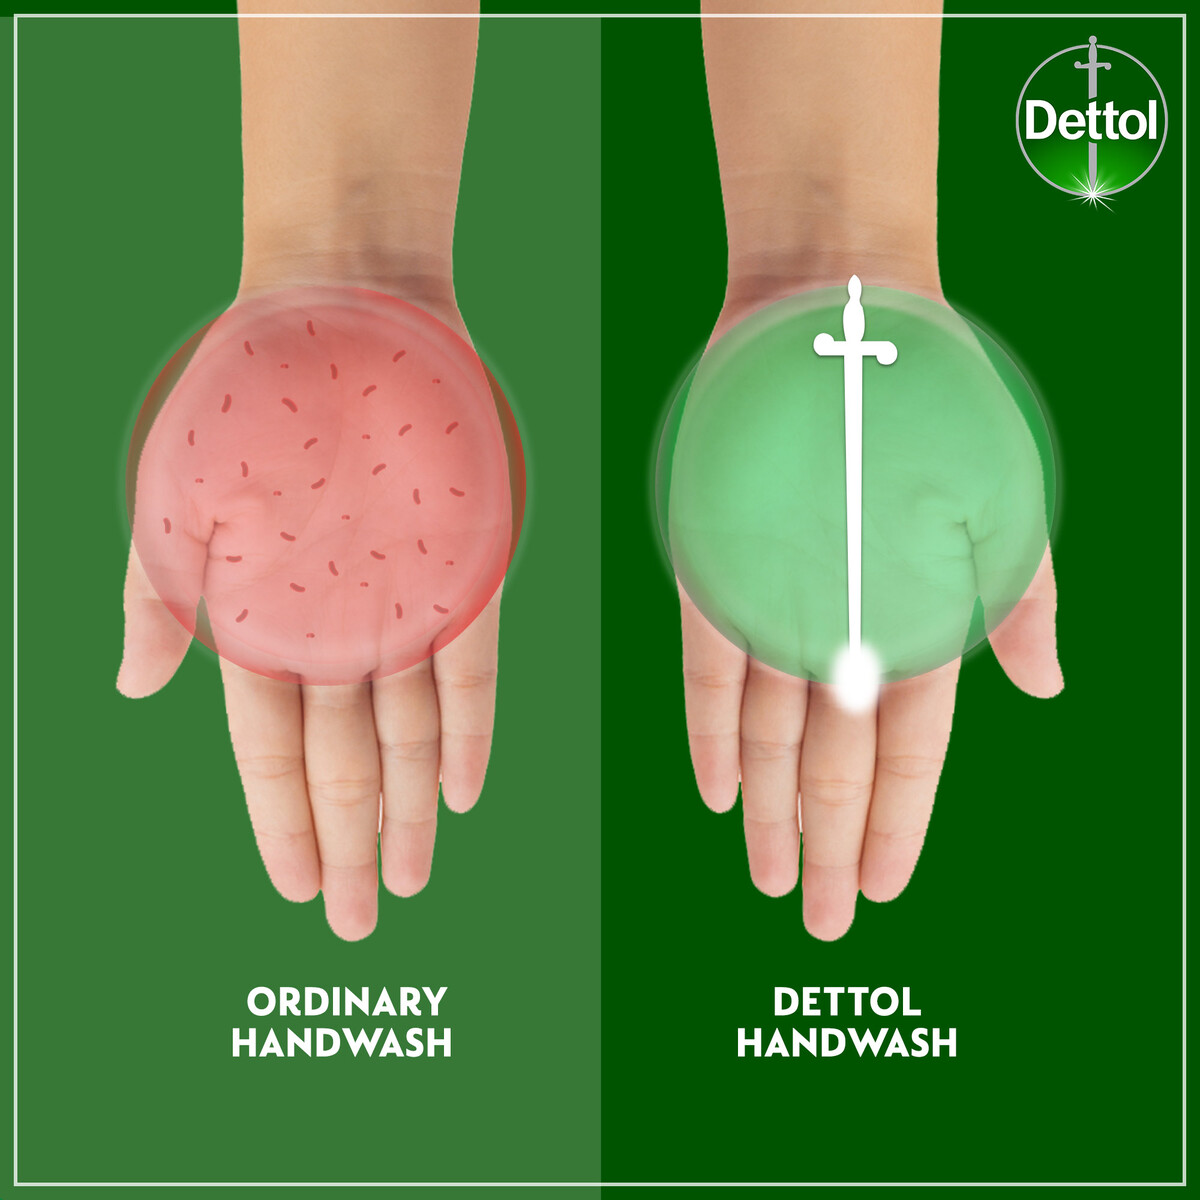 Dettol Hand Wash Liquid Soap Fresh Refill Citrus & Orange Blossom 1 Litre